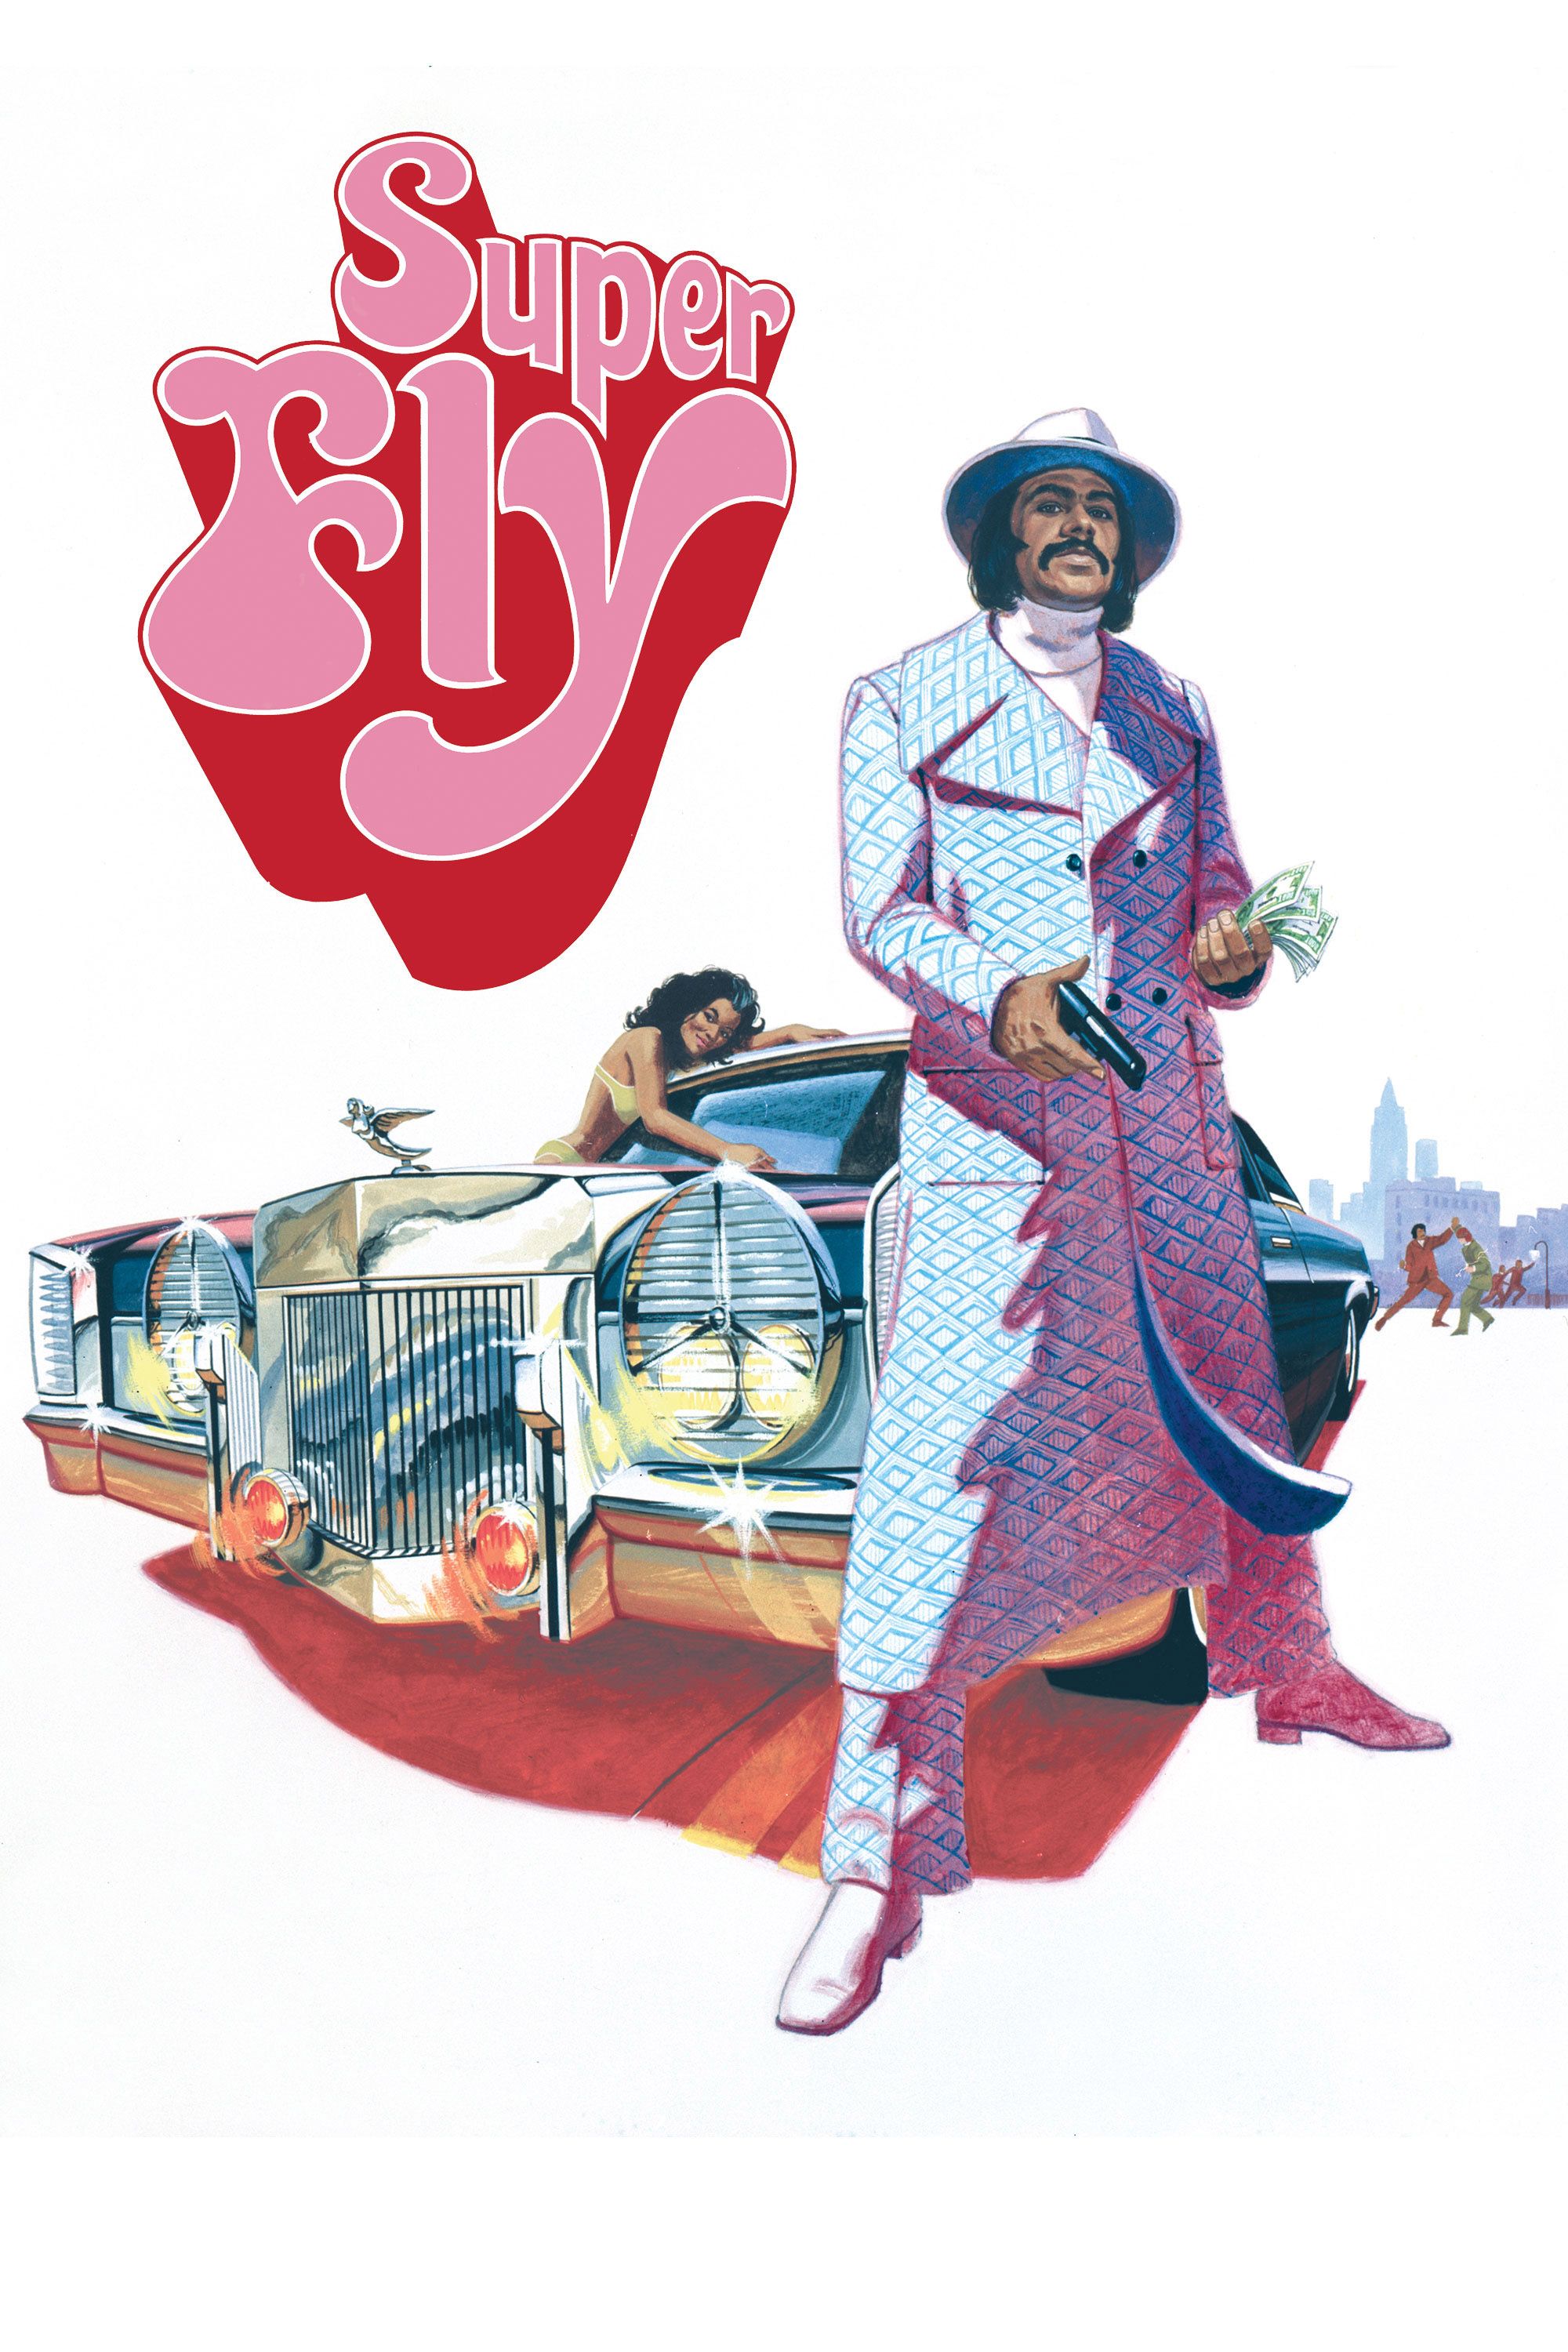 superfly 1972 full movie